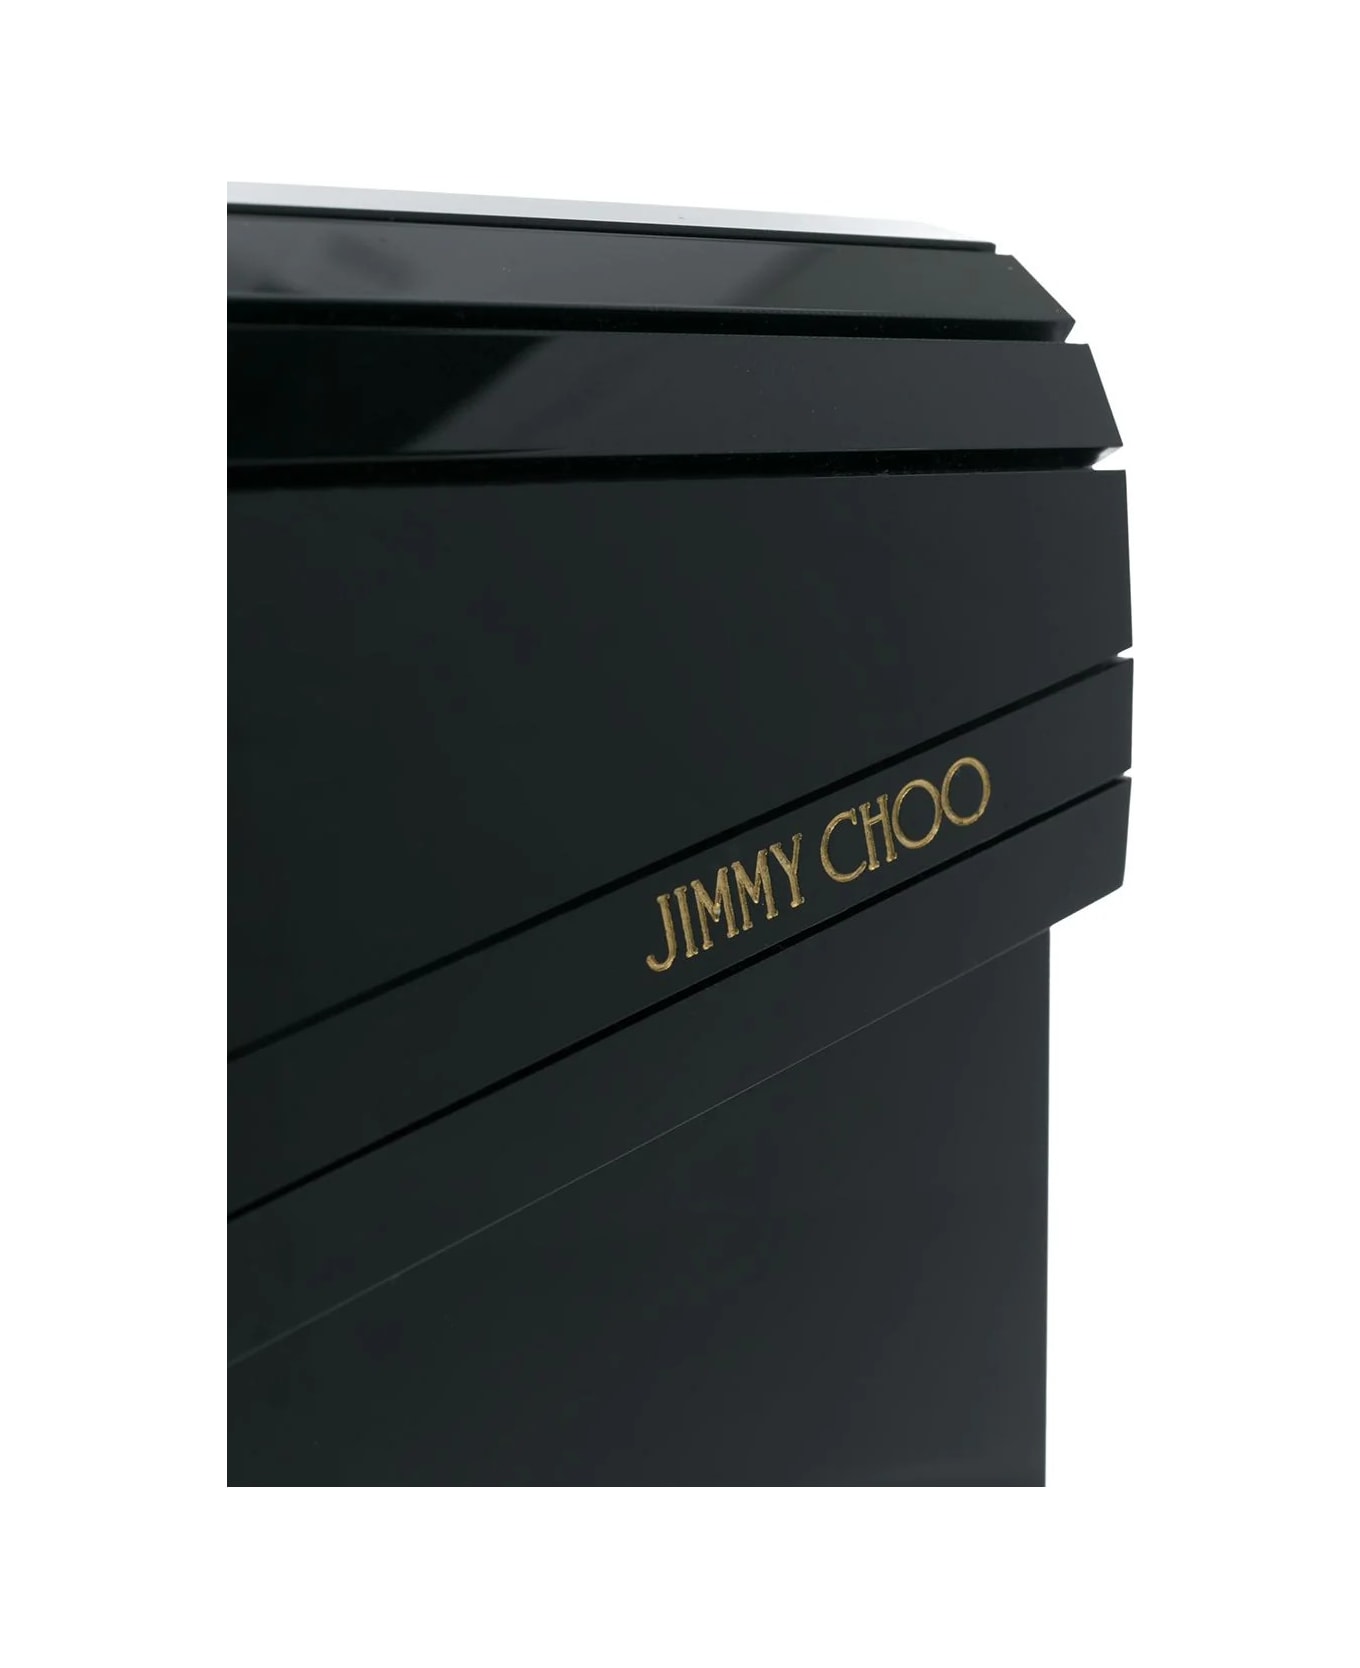 Jimmy Choo Black Acrylic Clutch Bag - Black